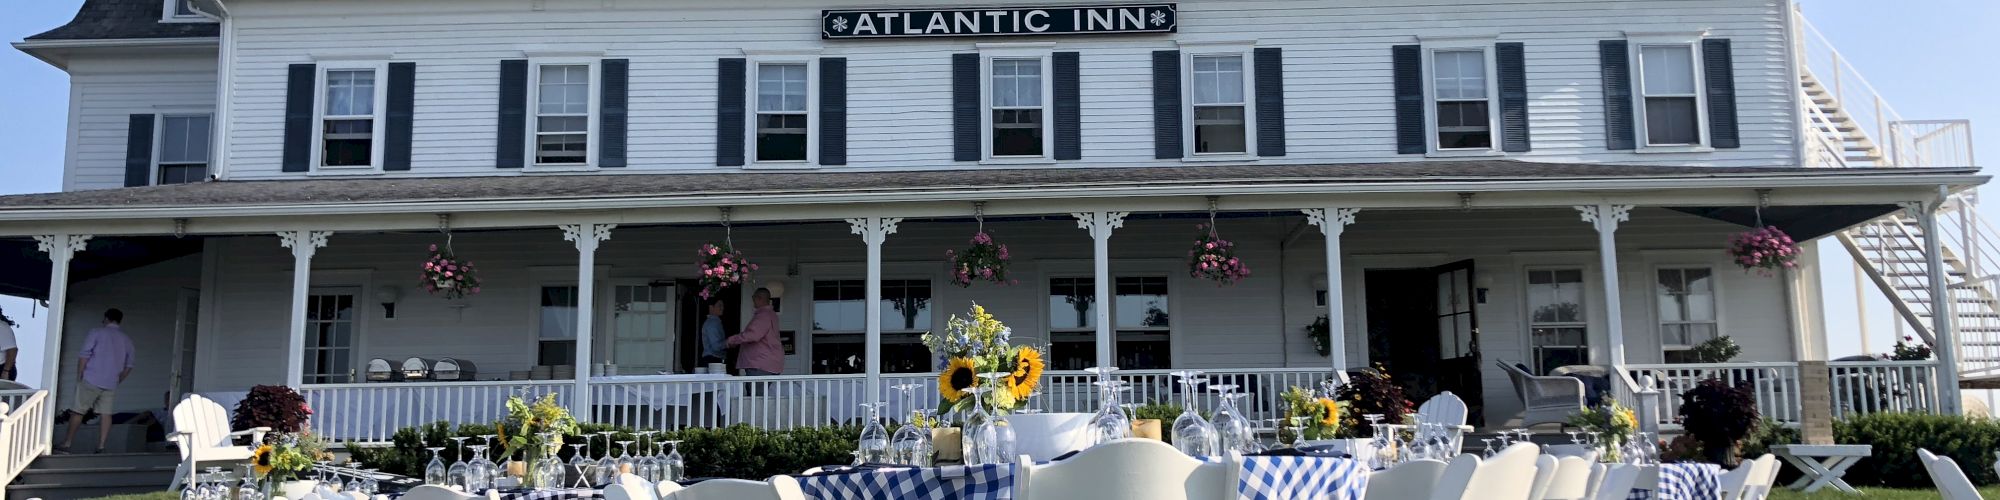 The Atlantic Inn